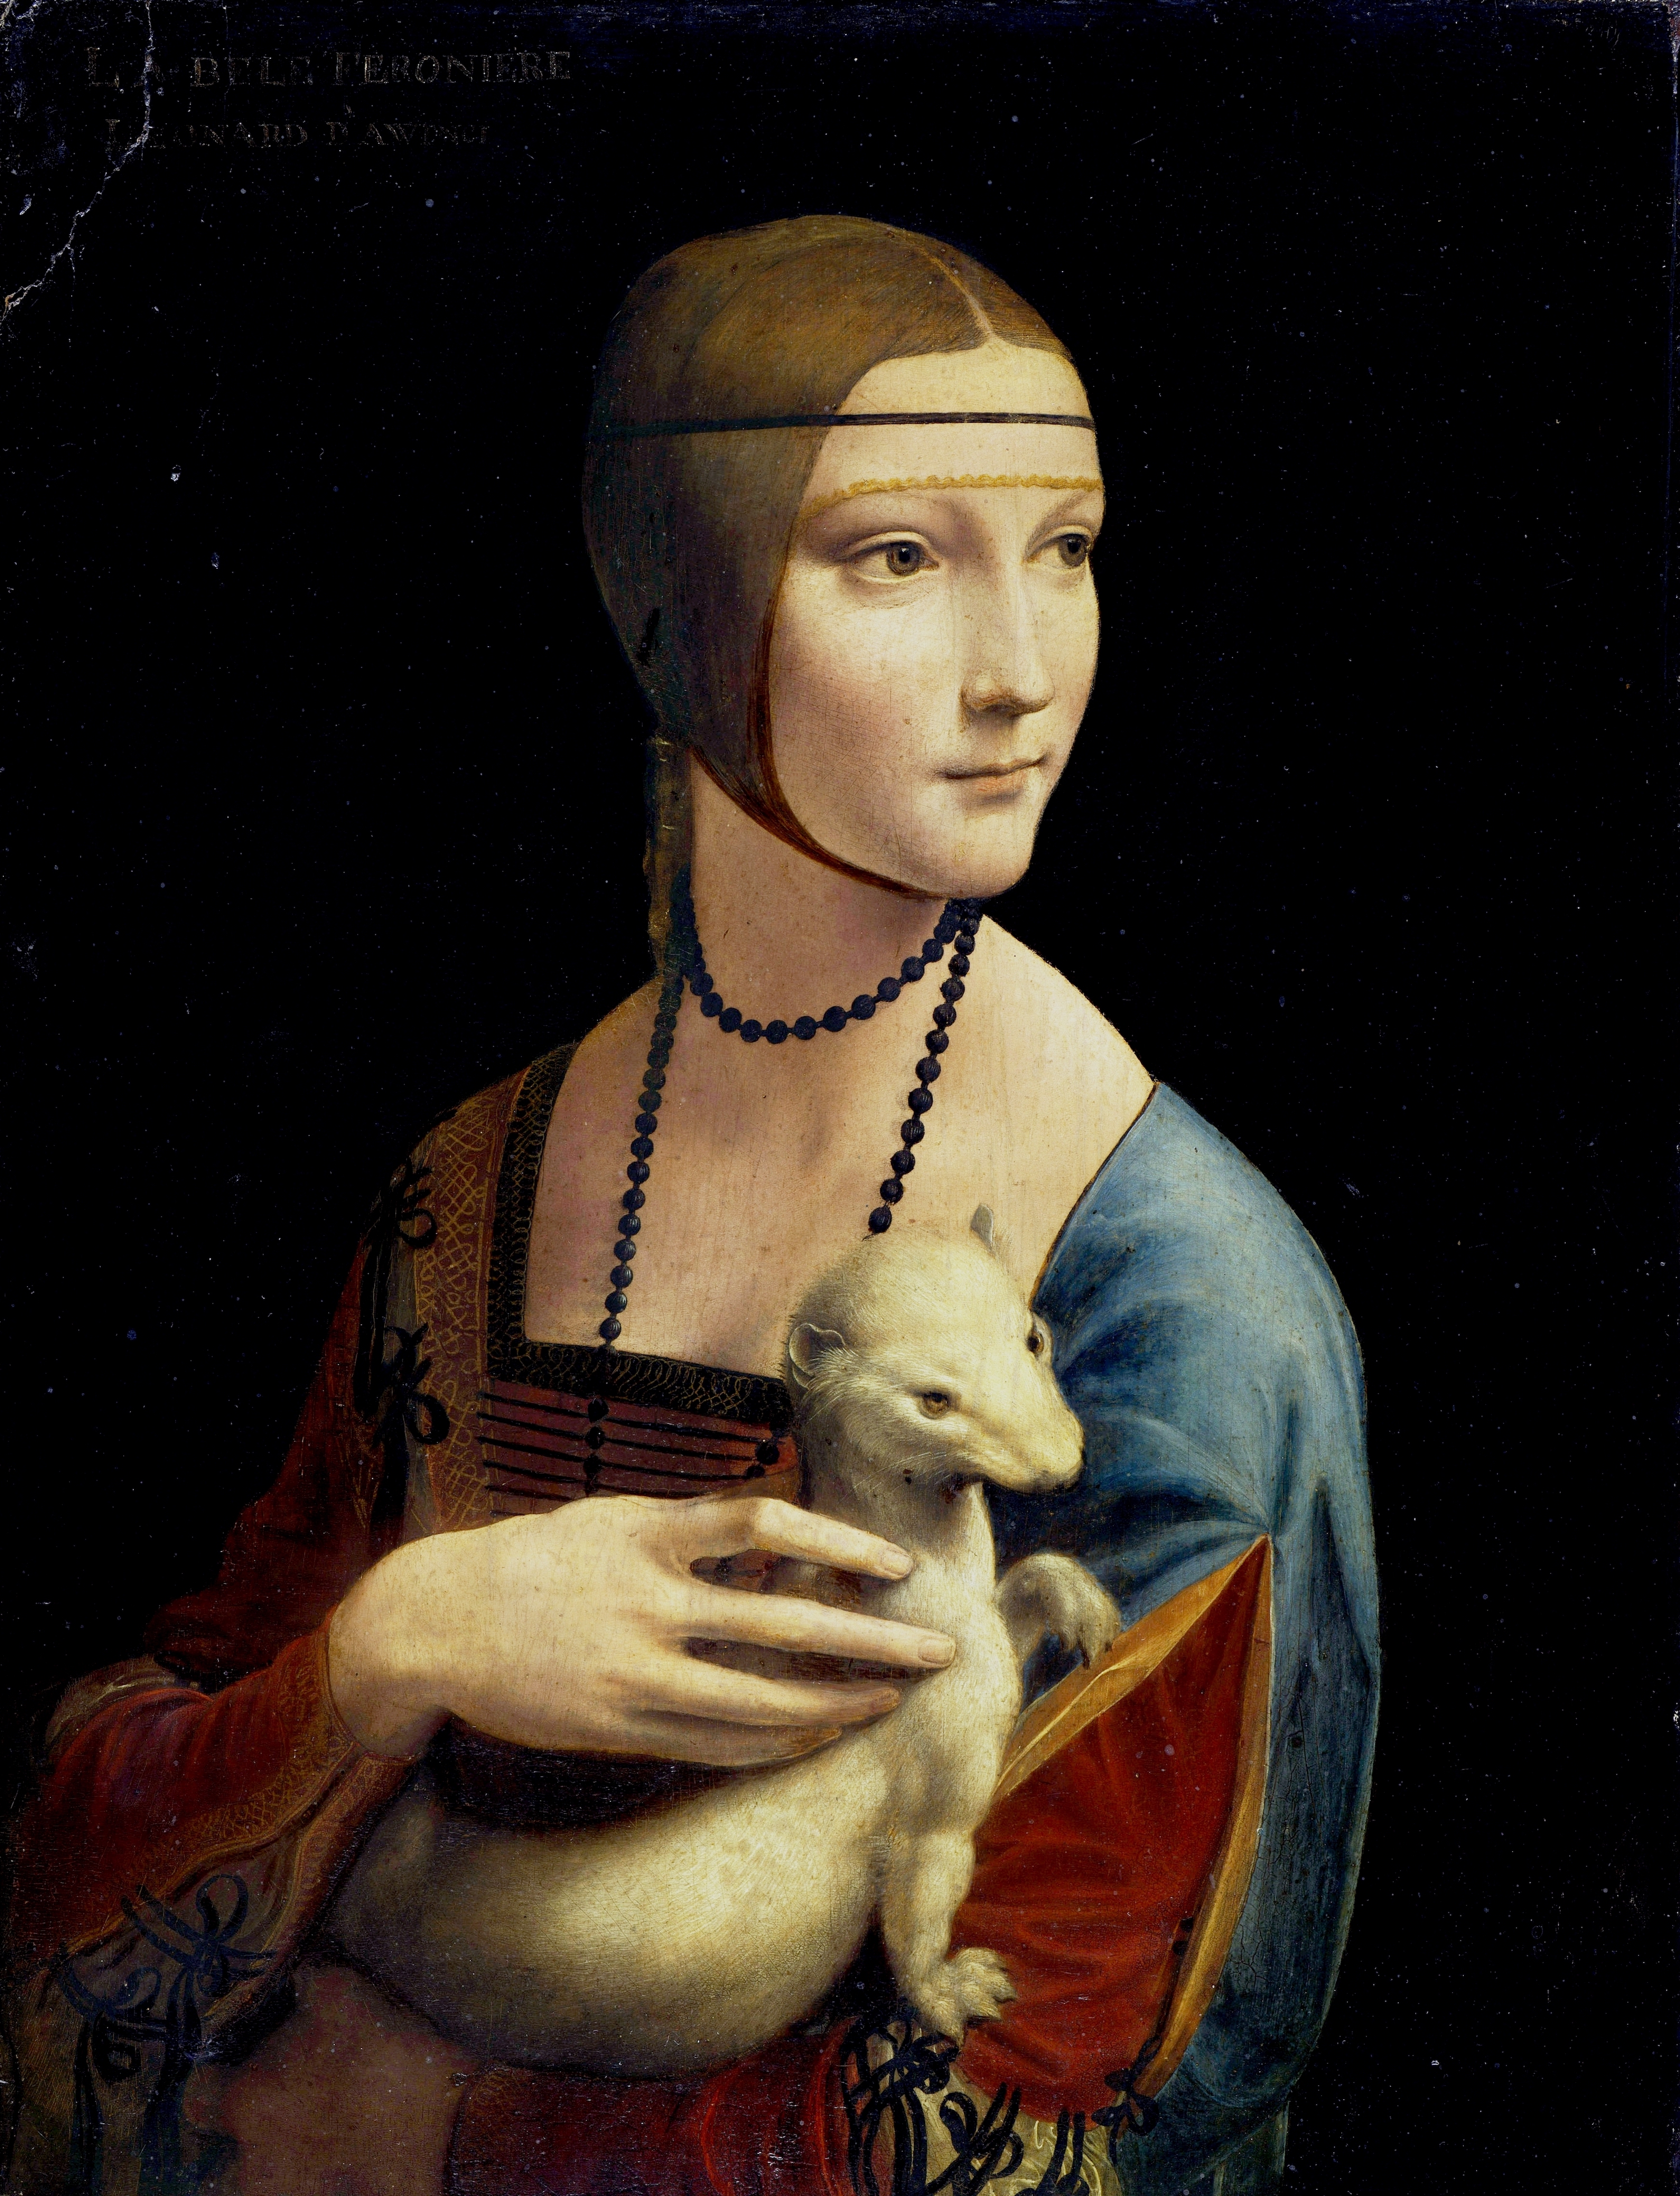 Lady with an Ermine by Leonardo da Vinci - 1489-1490 - 54 × 39 cm National Museum in Krakow